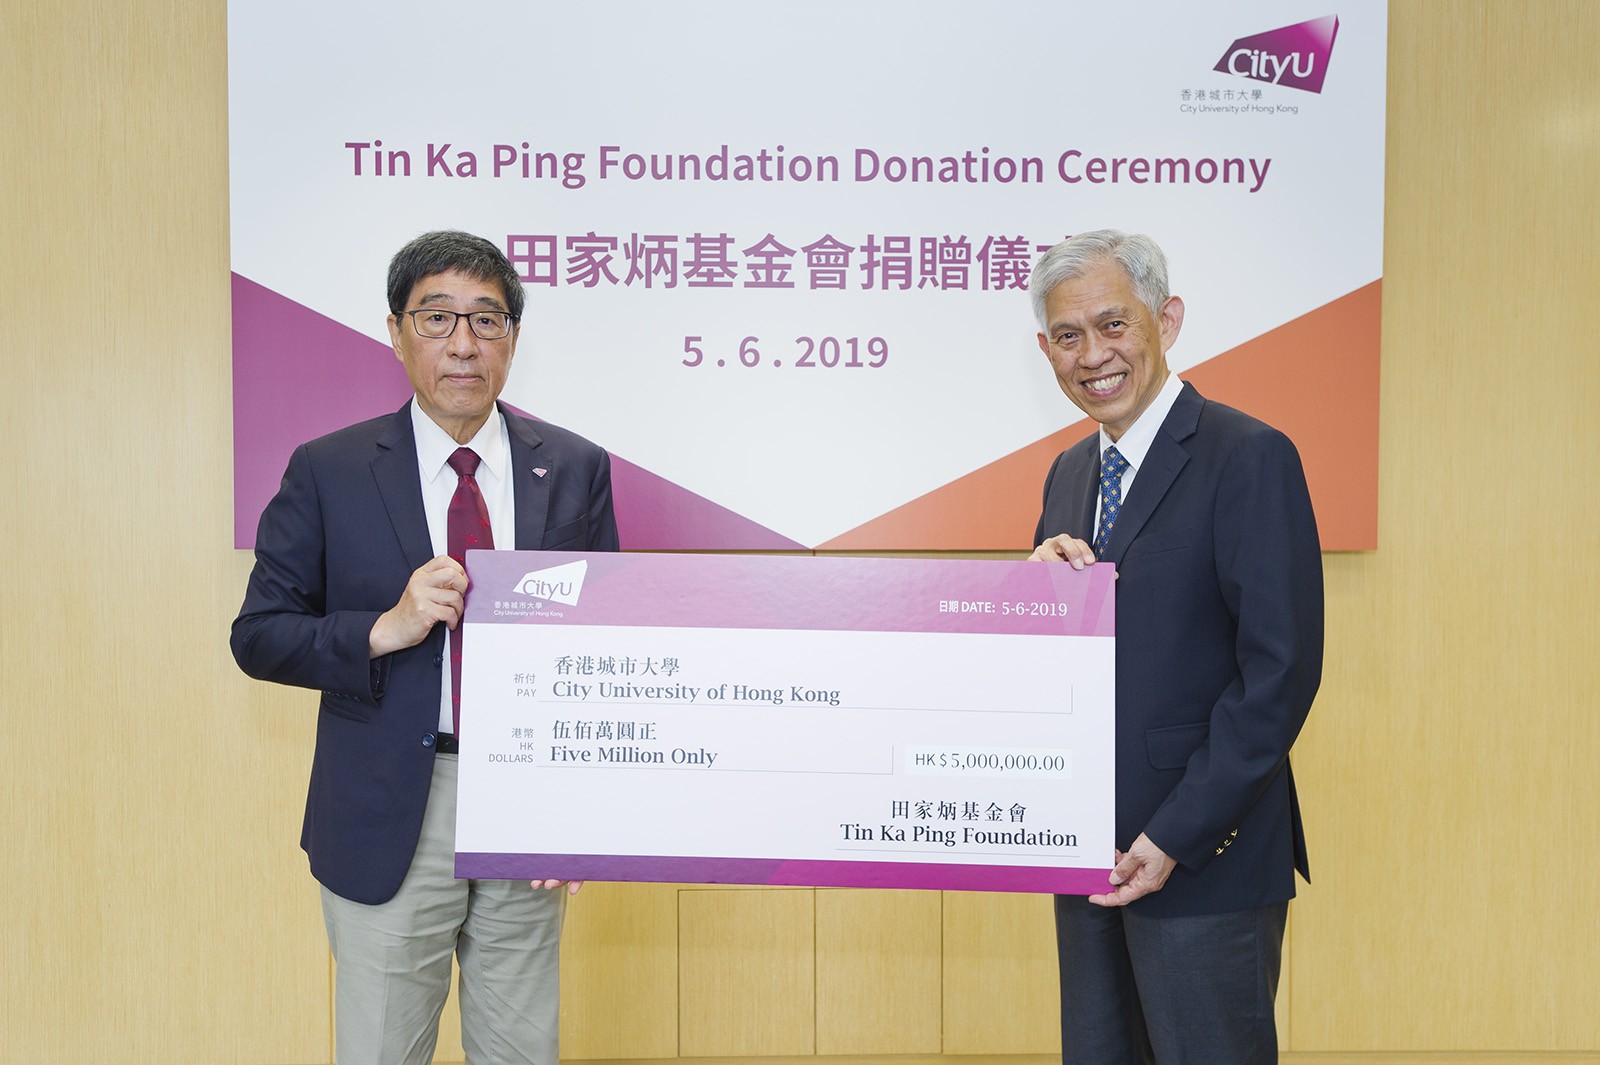 The Tin Ka Ping Foundation awarded a HK$5 million donation to CityU.